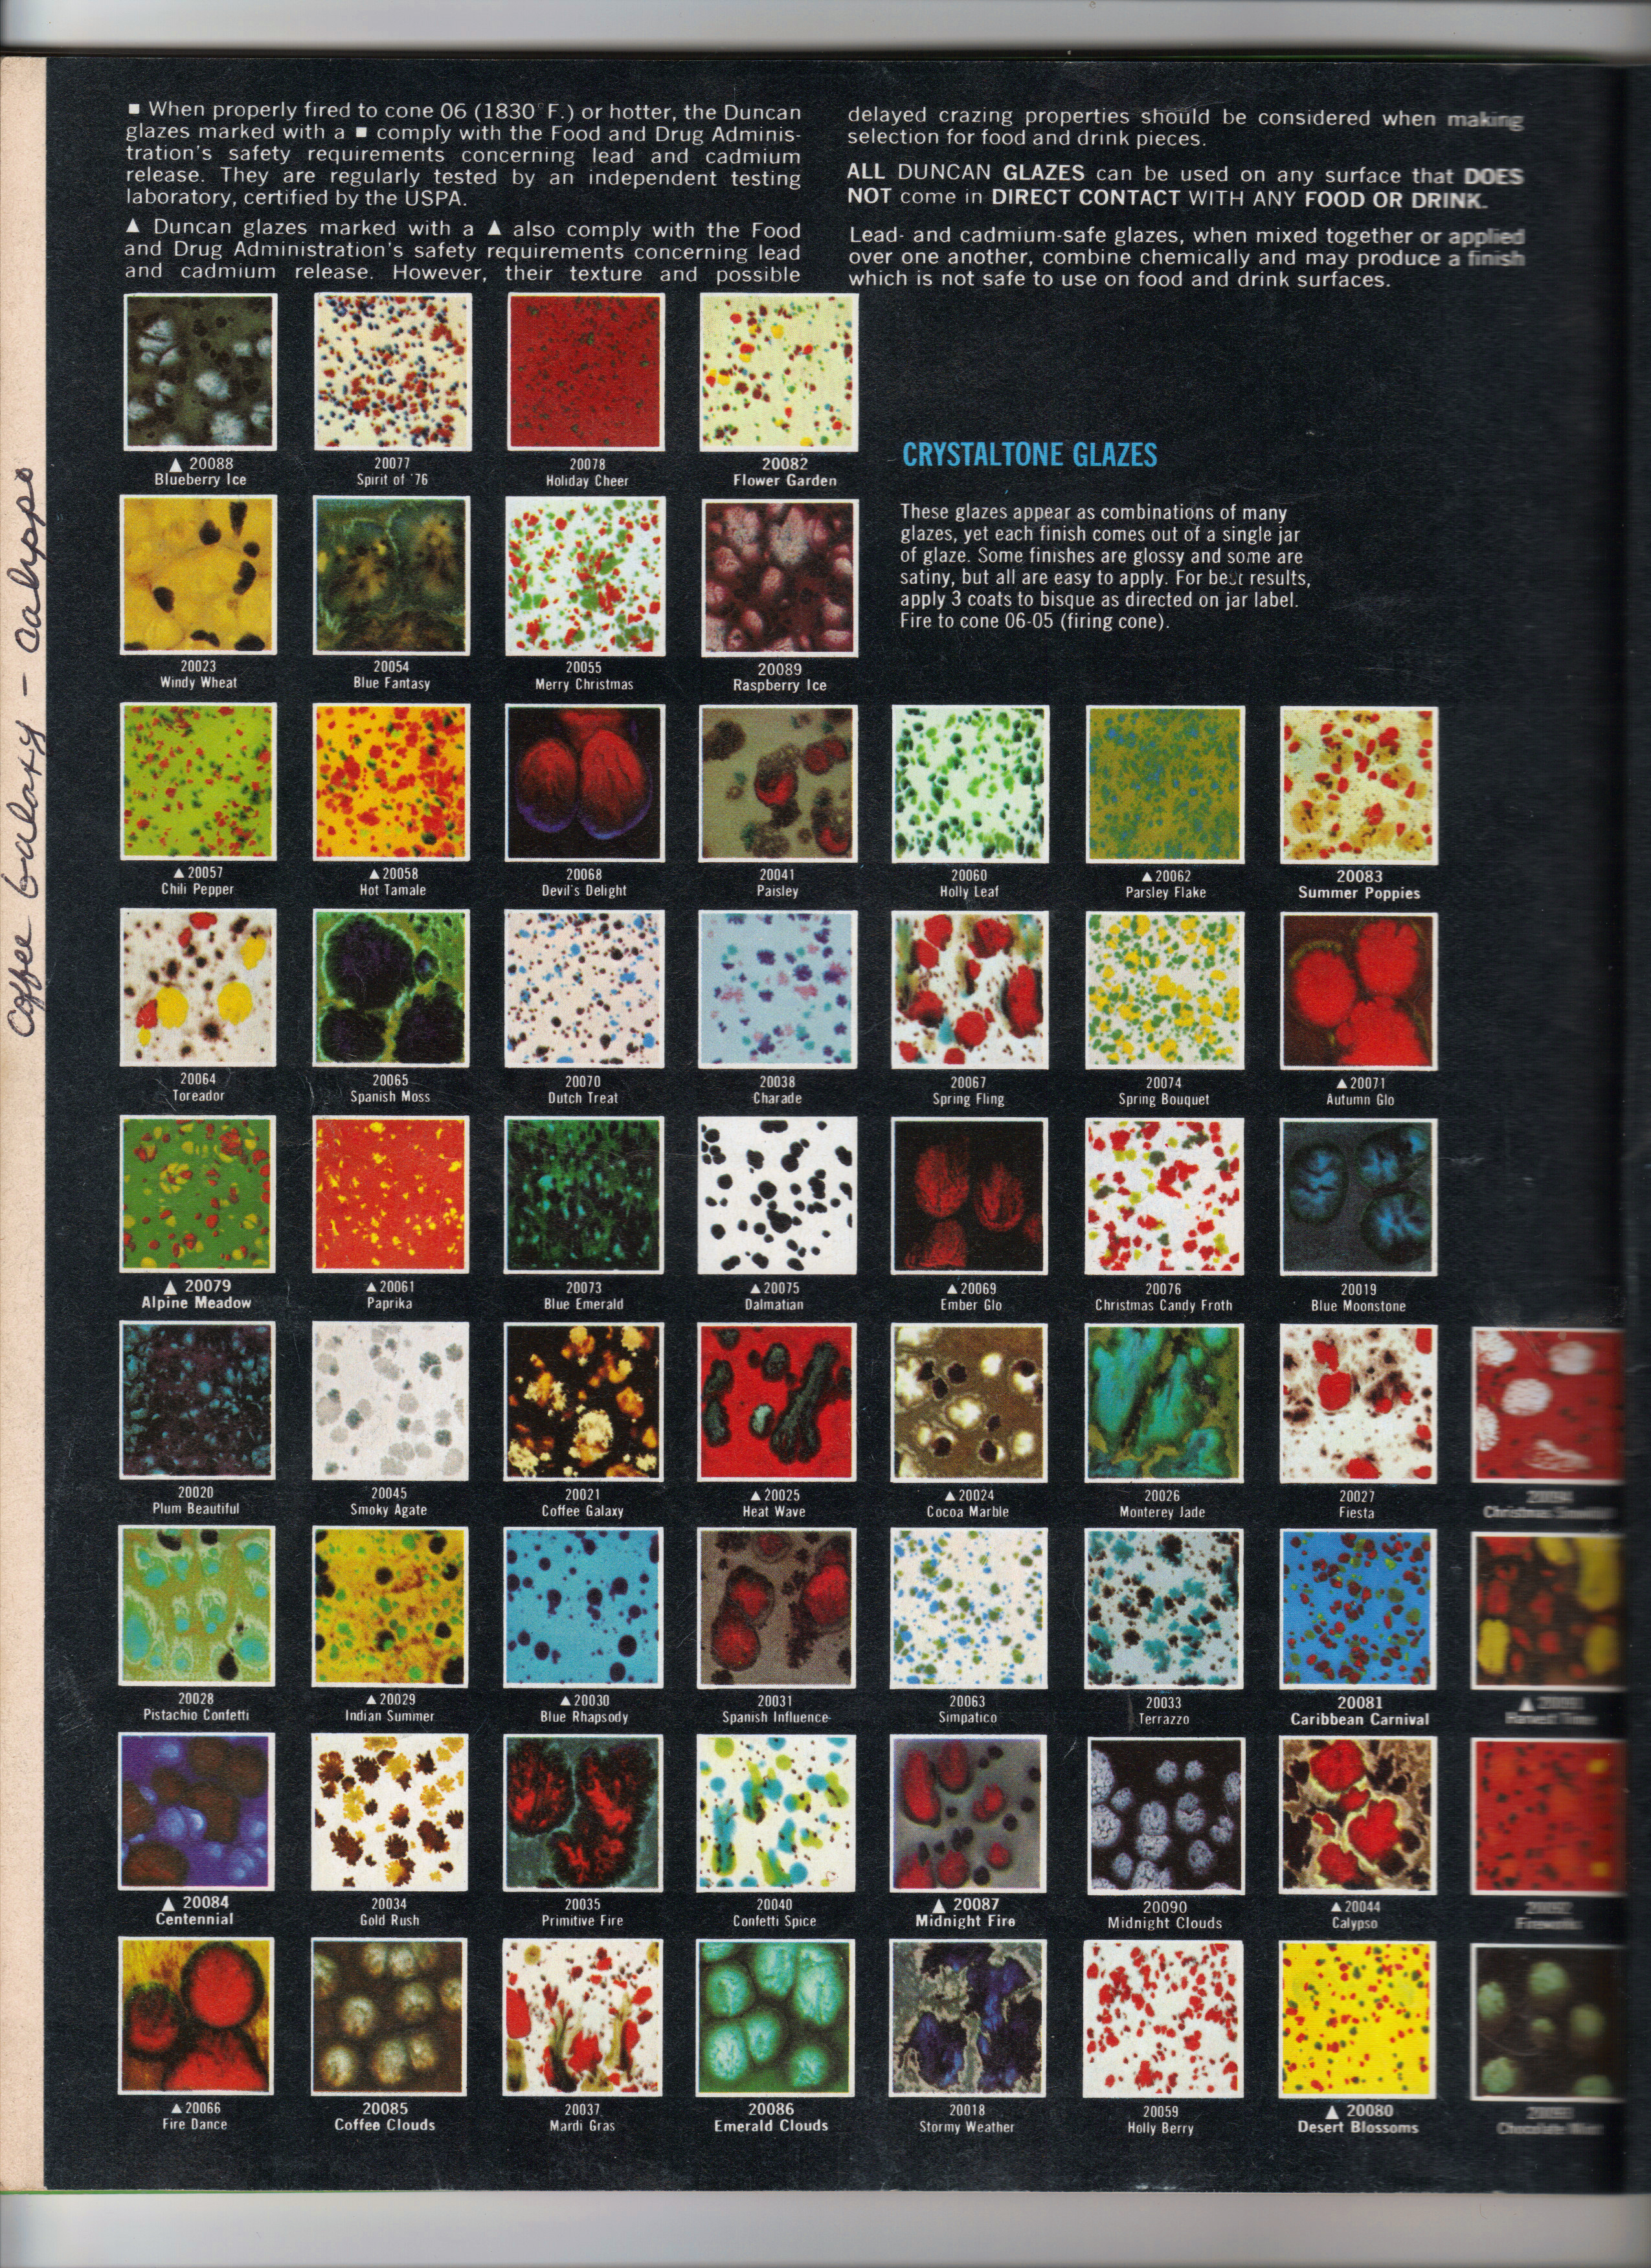 Ceramic Color Chart